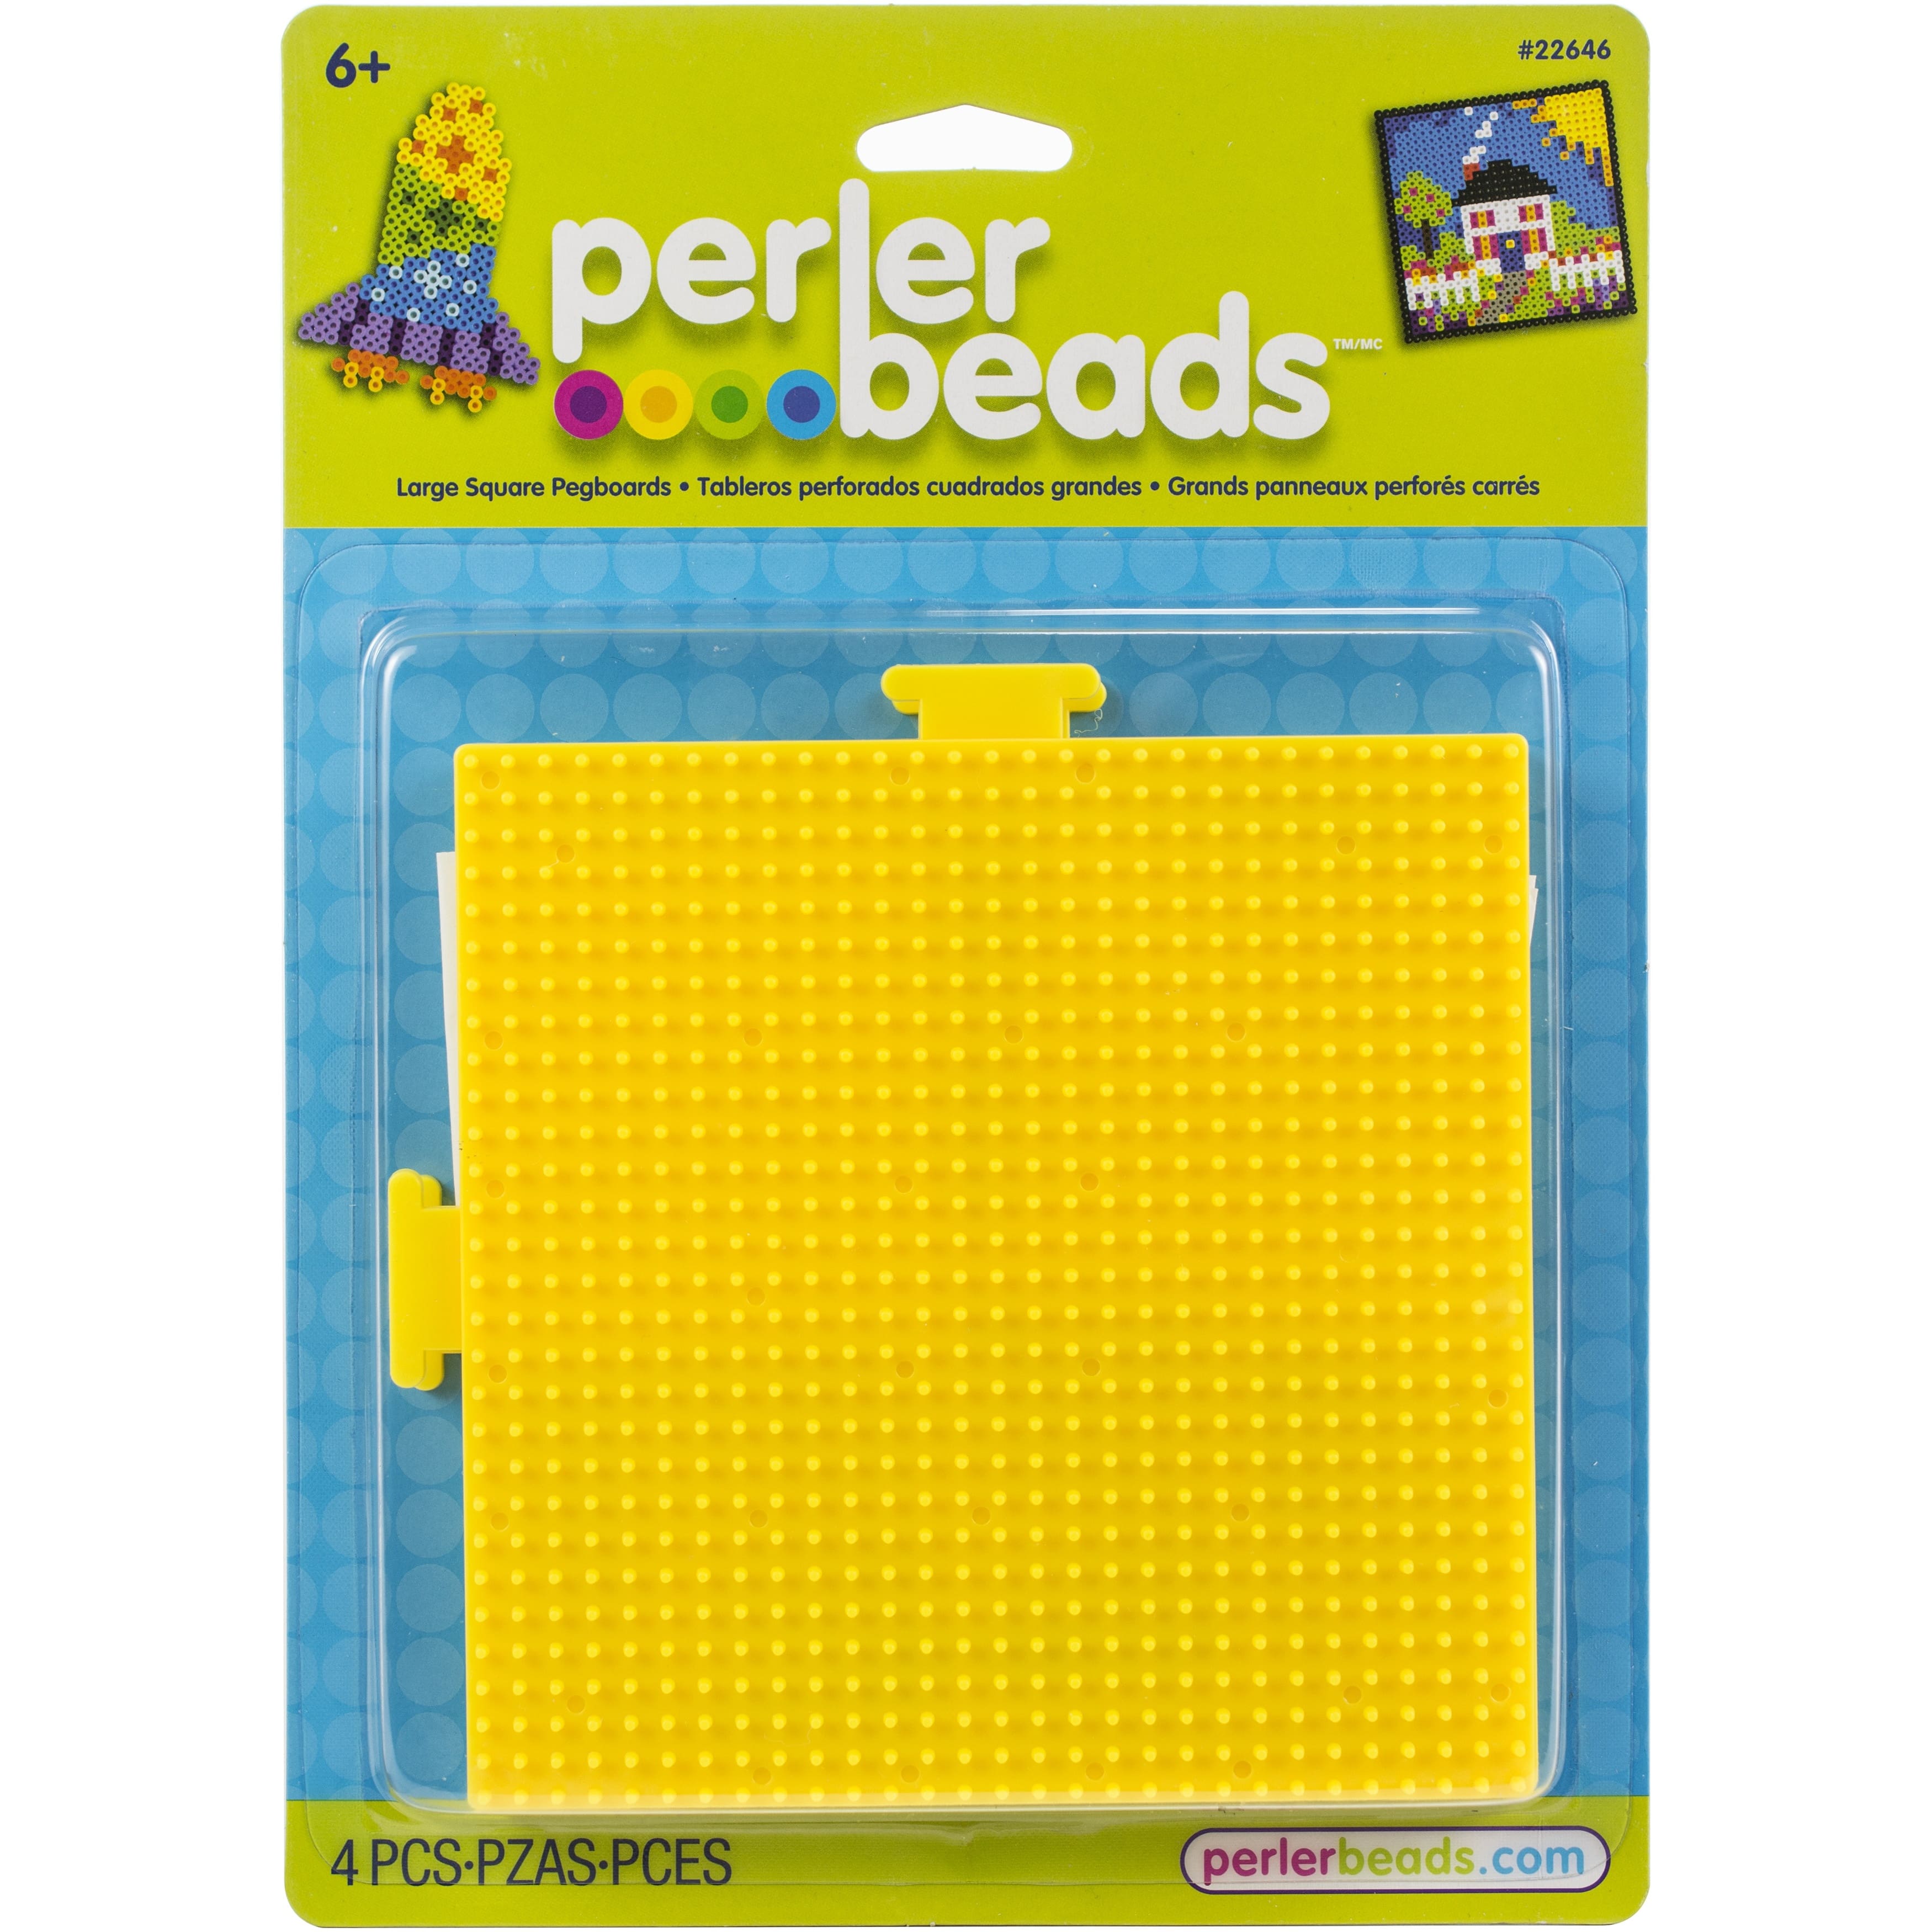 square peg boards for perler bead